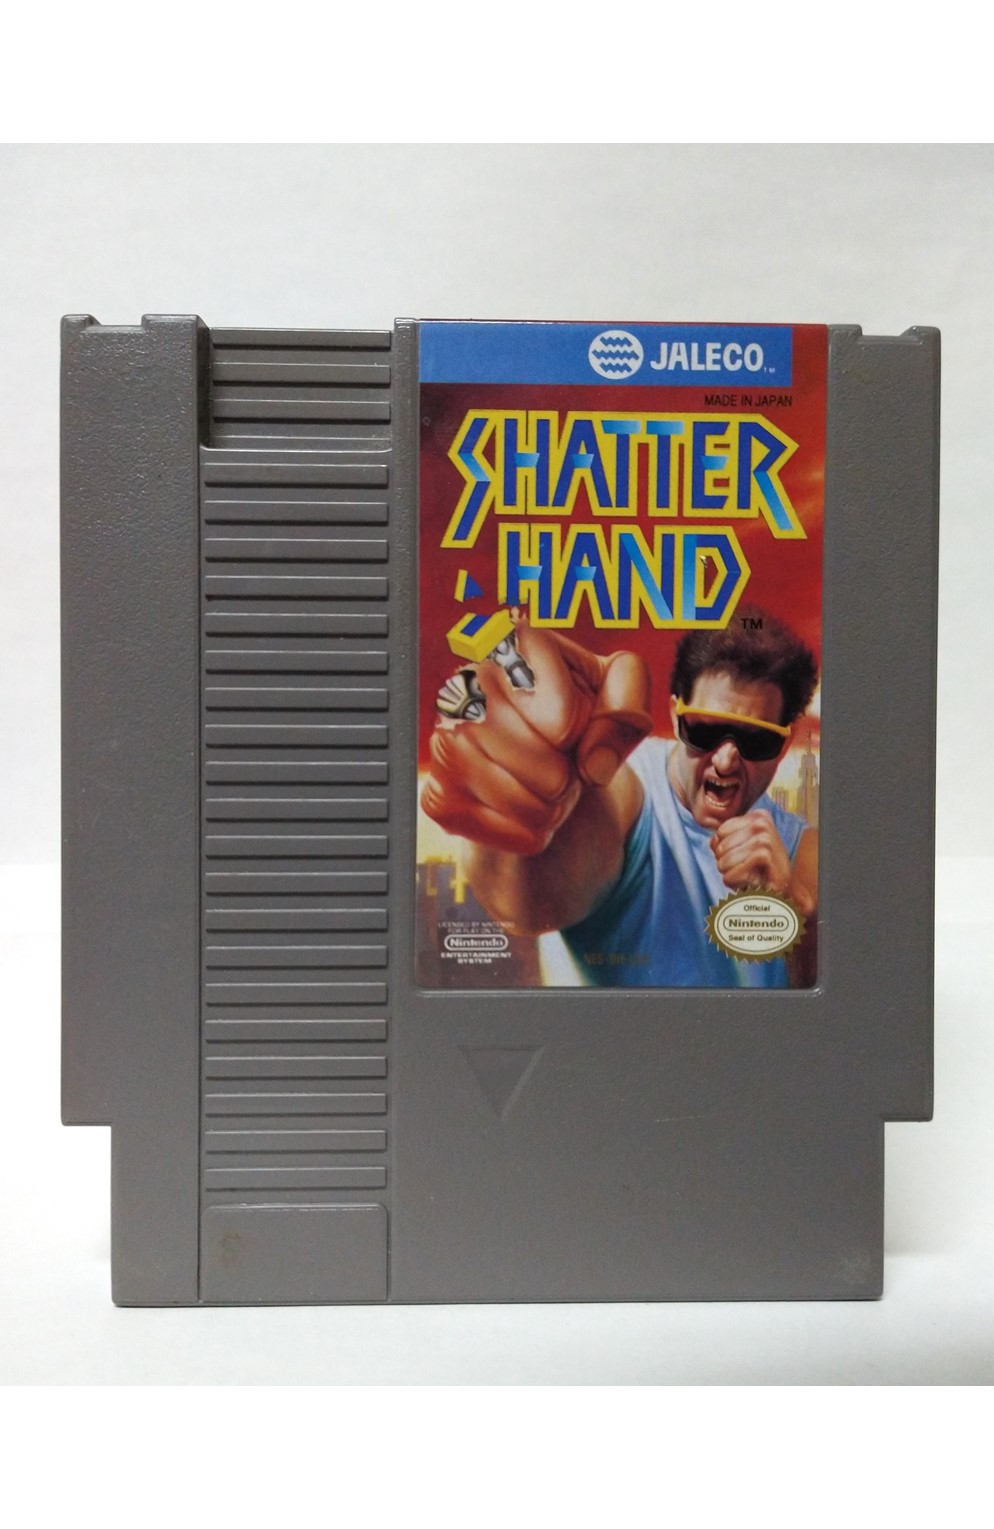 Nintendo Nes Shatter Hand